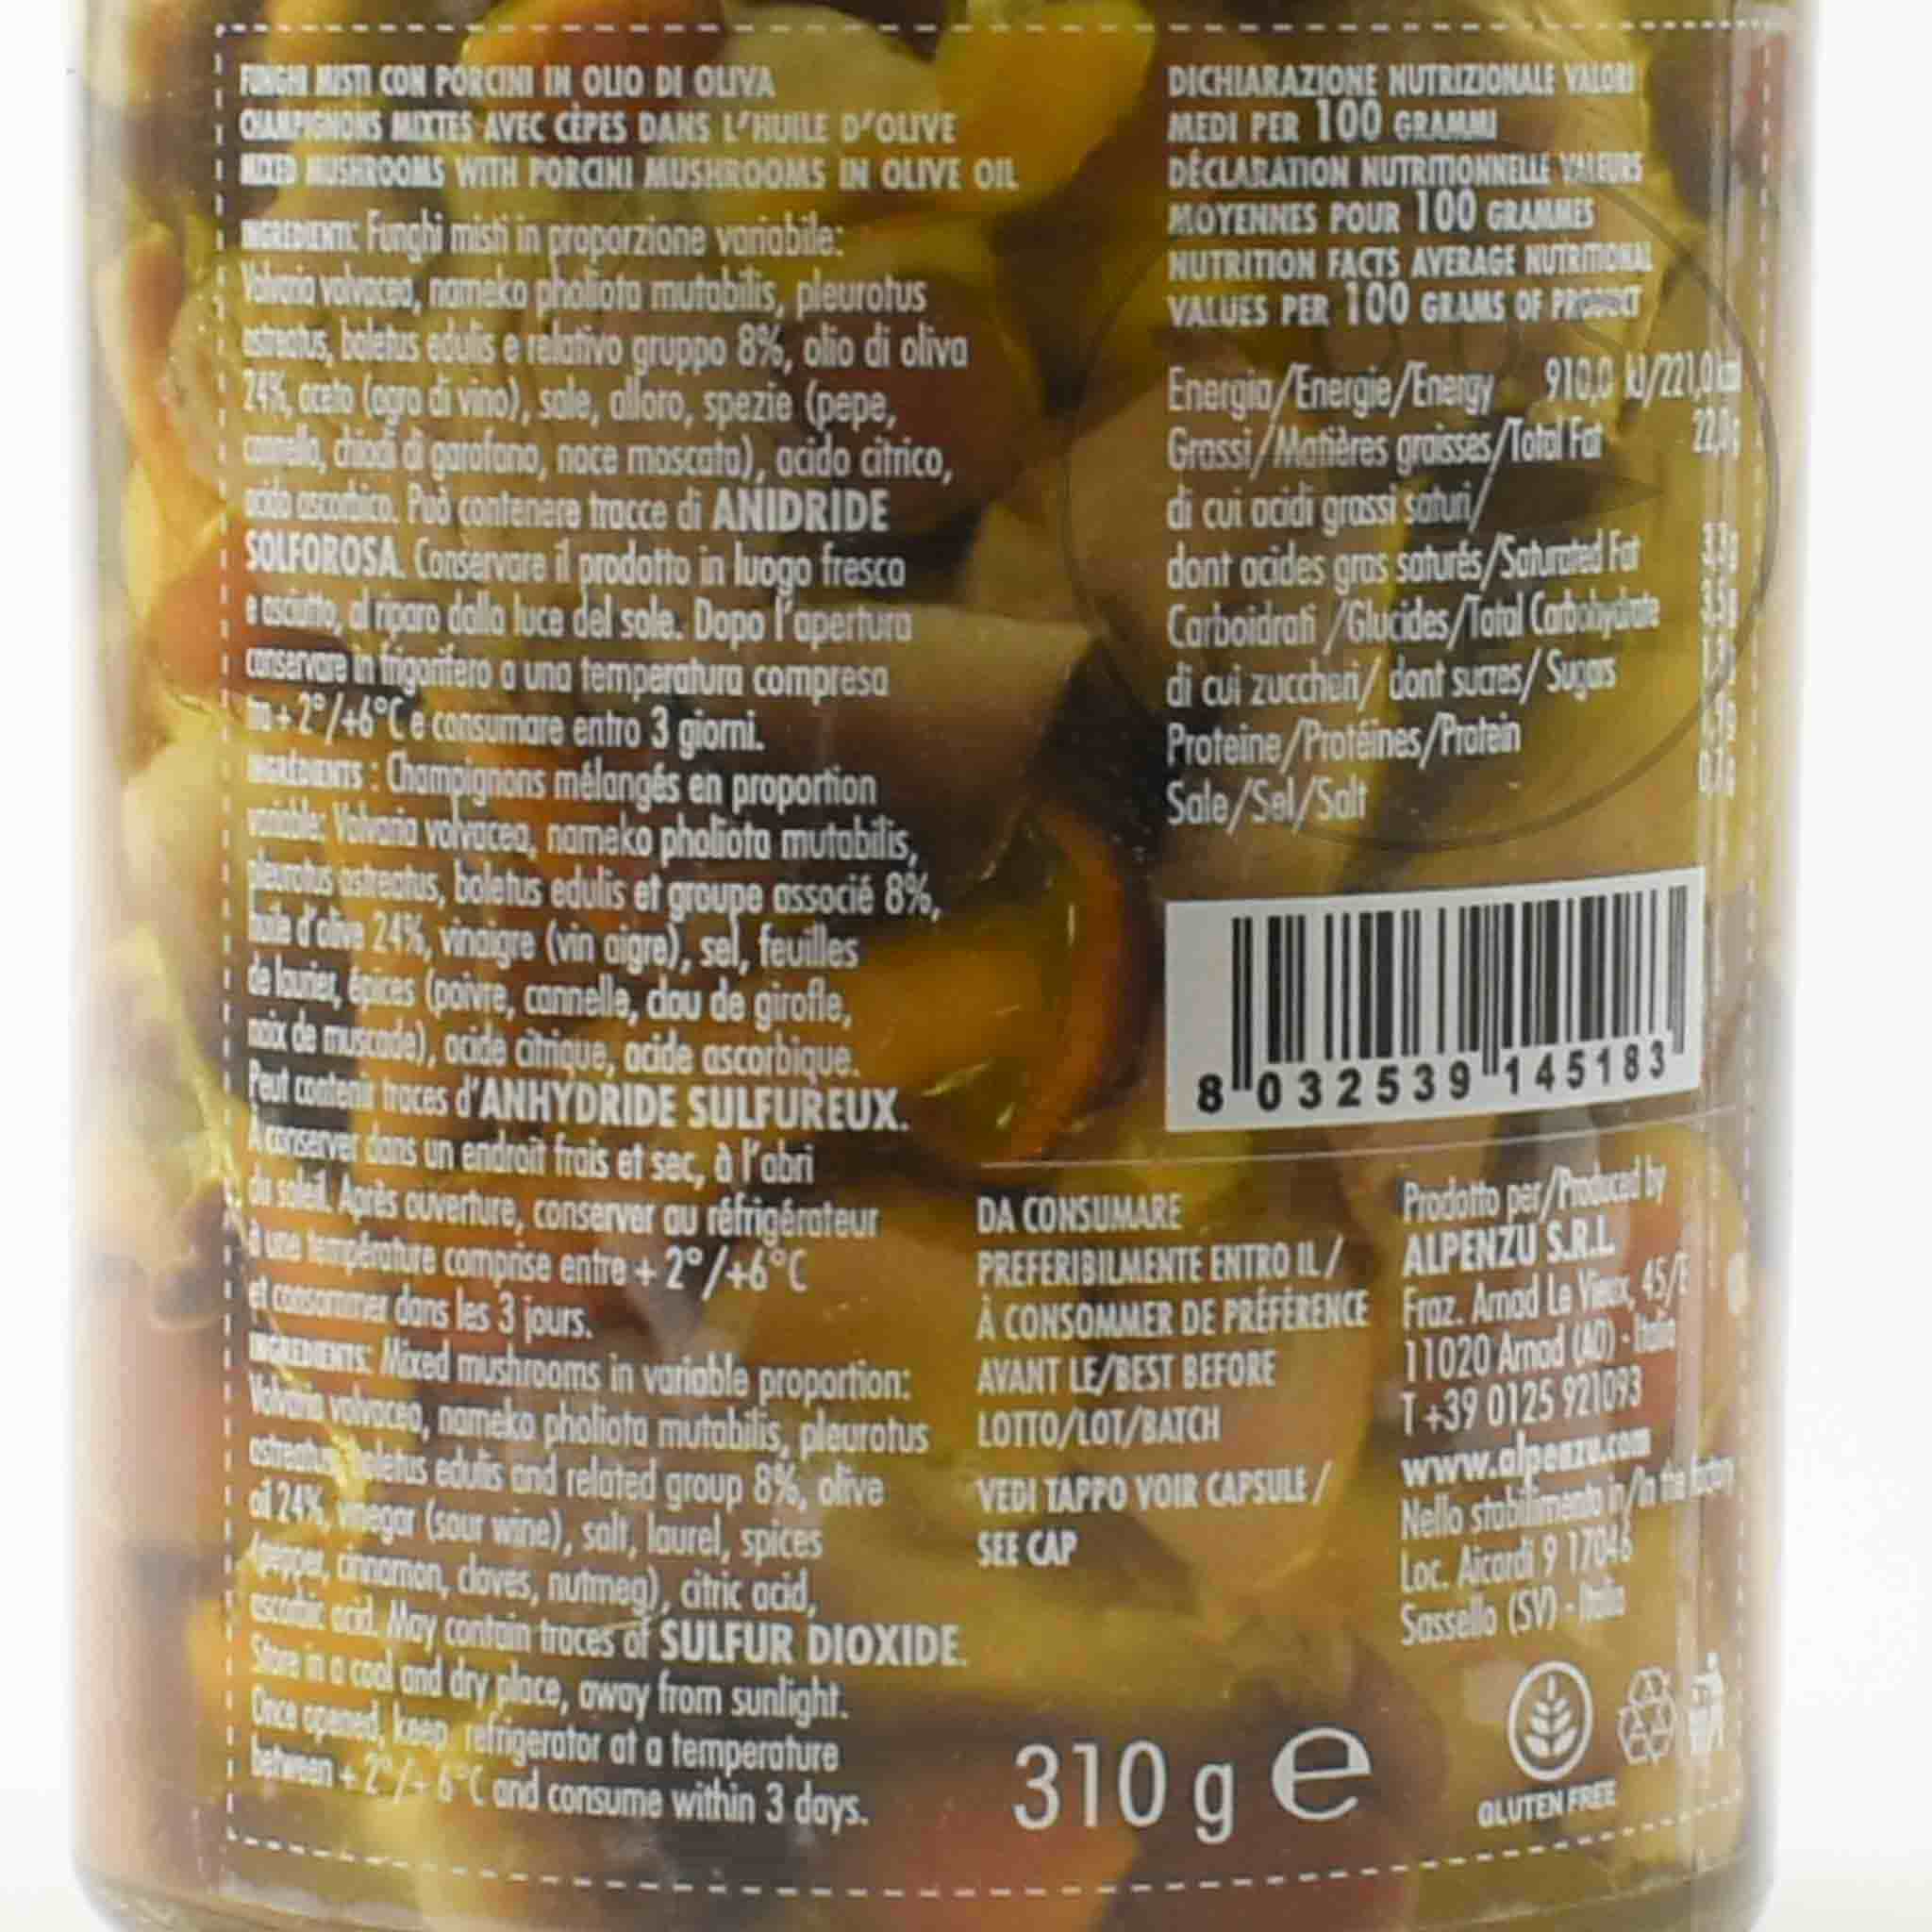 Alpenzu Mixed Mushrooms with Porcini Mushrooms in Olive Oil, 310g